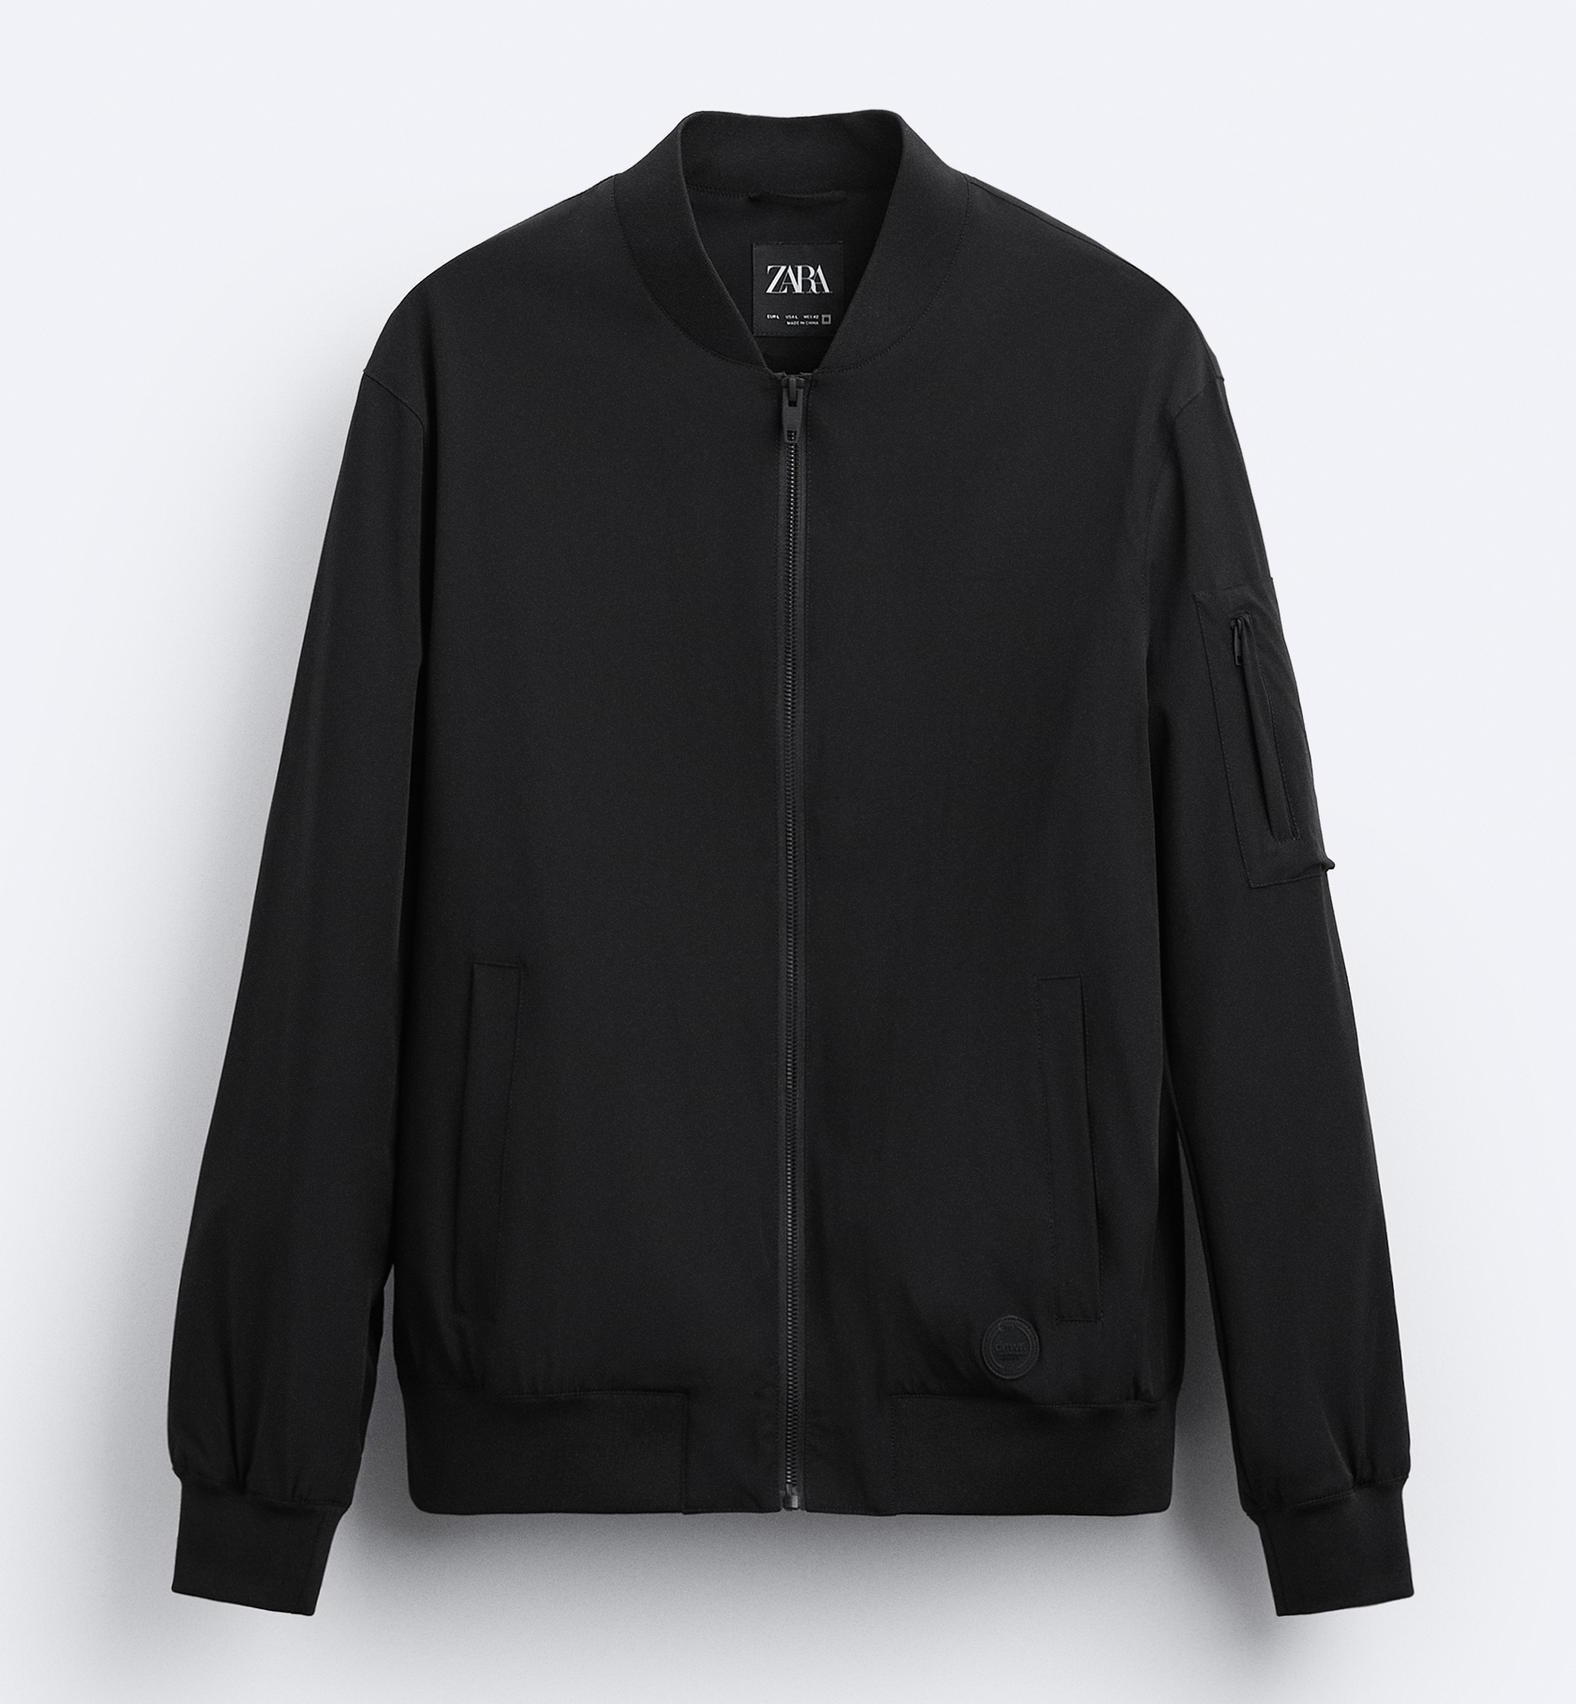 Куртка-бомбер Zara Lightweight, черный куртка бомбер zara contrast черный